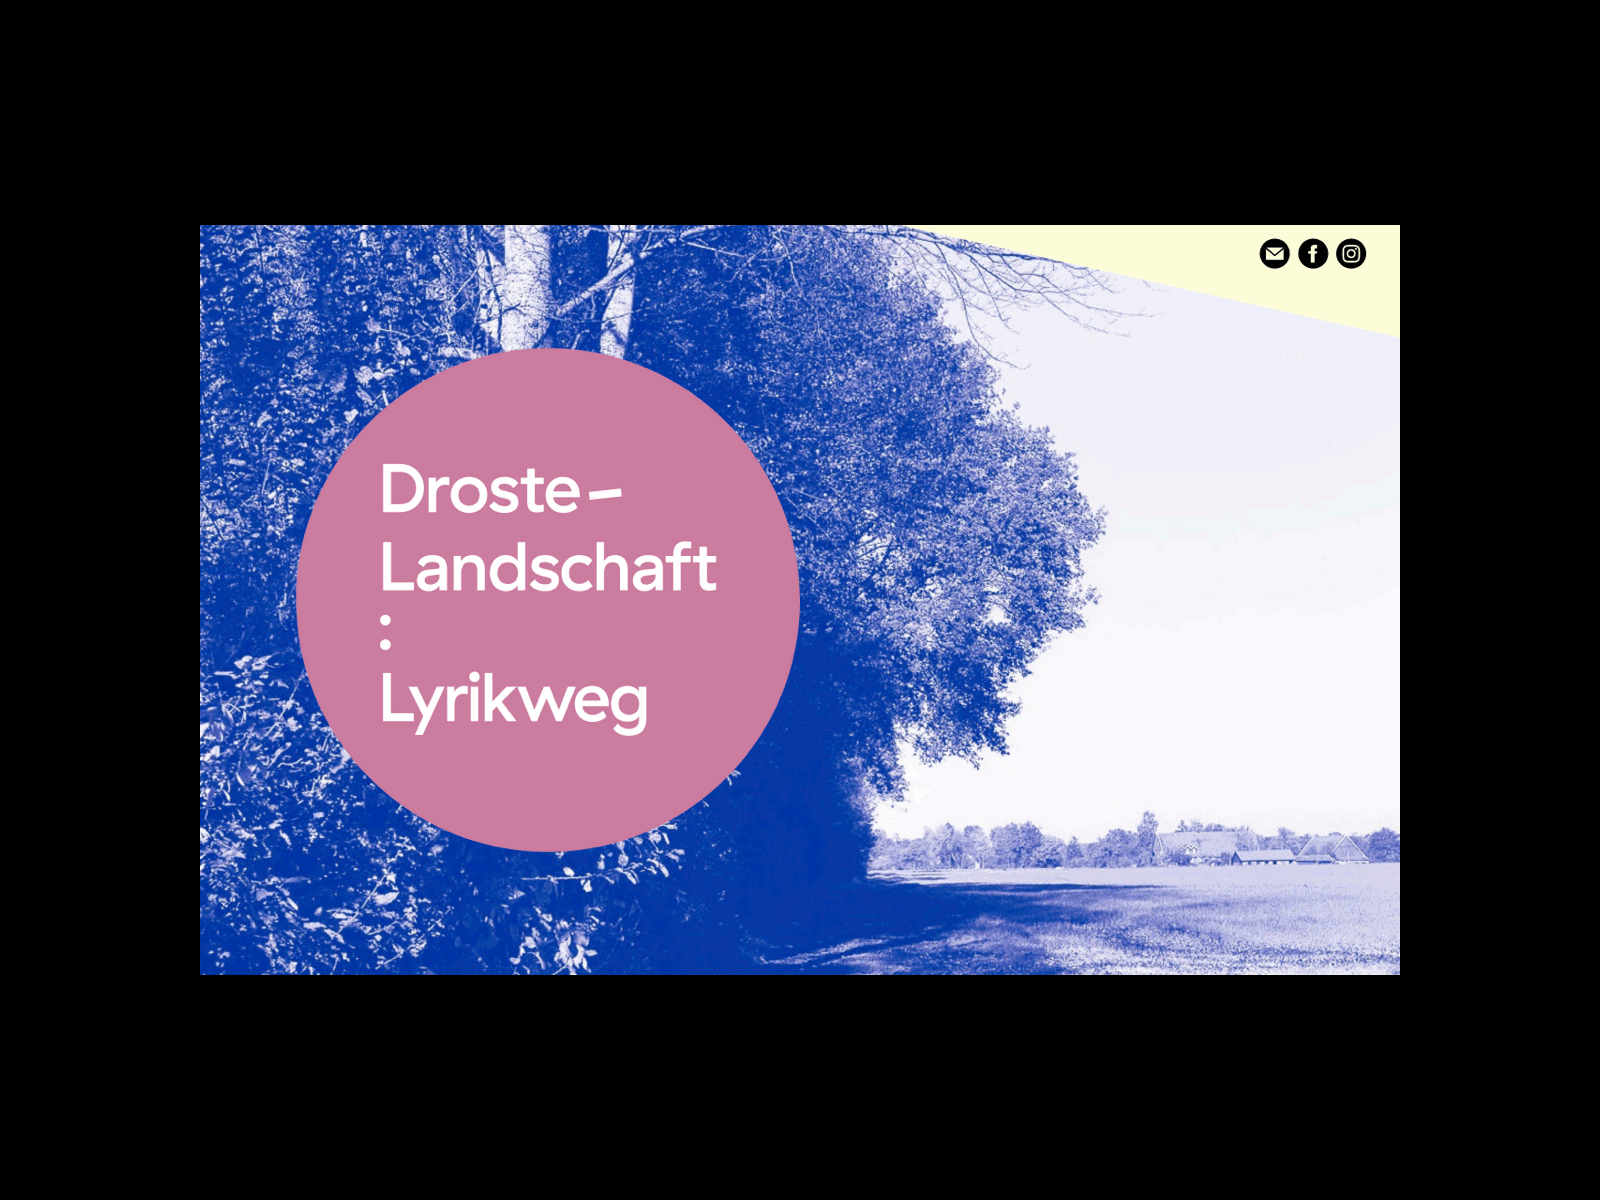 Dorste-Landschaft : Lyrikweg